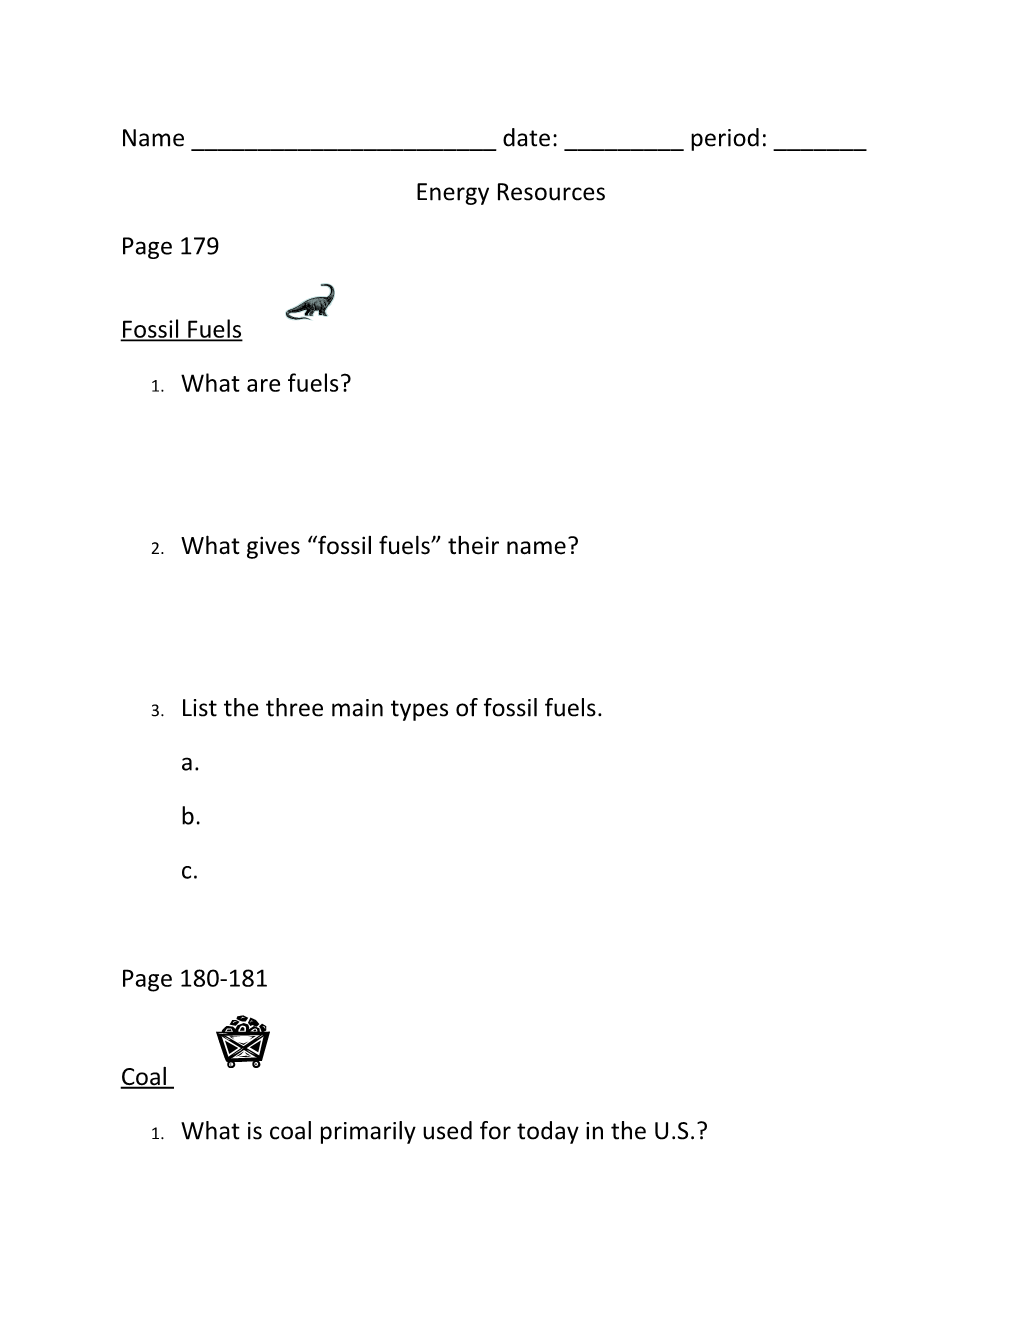 Energy Resources